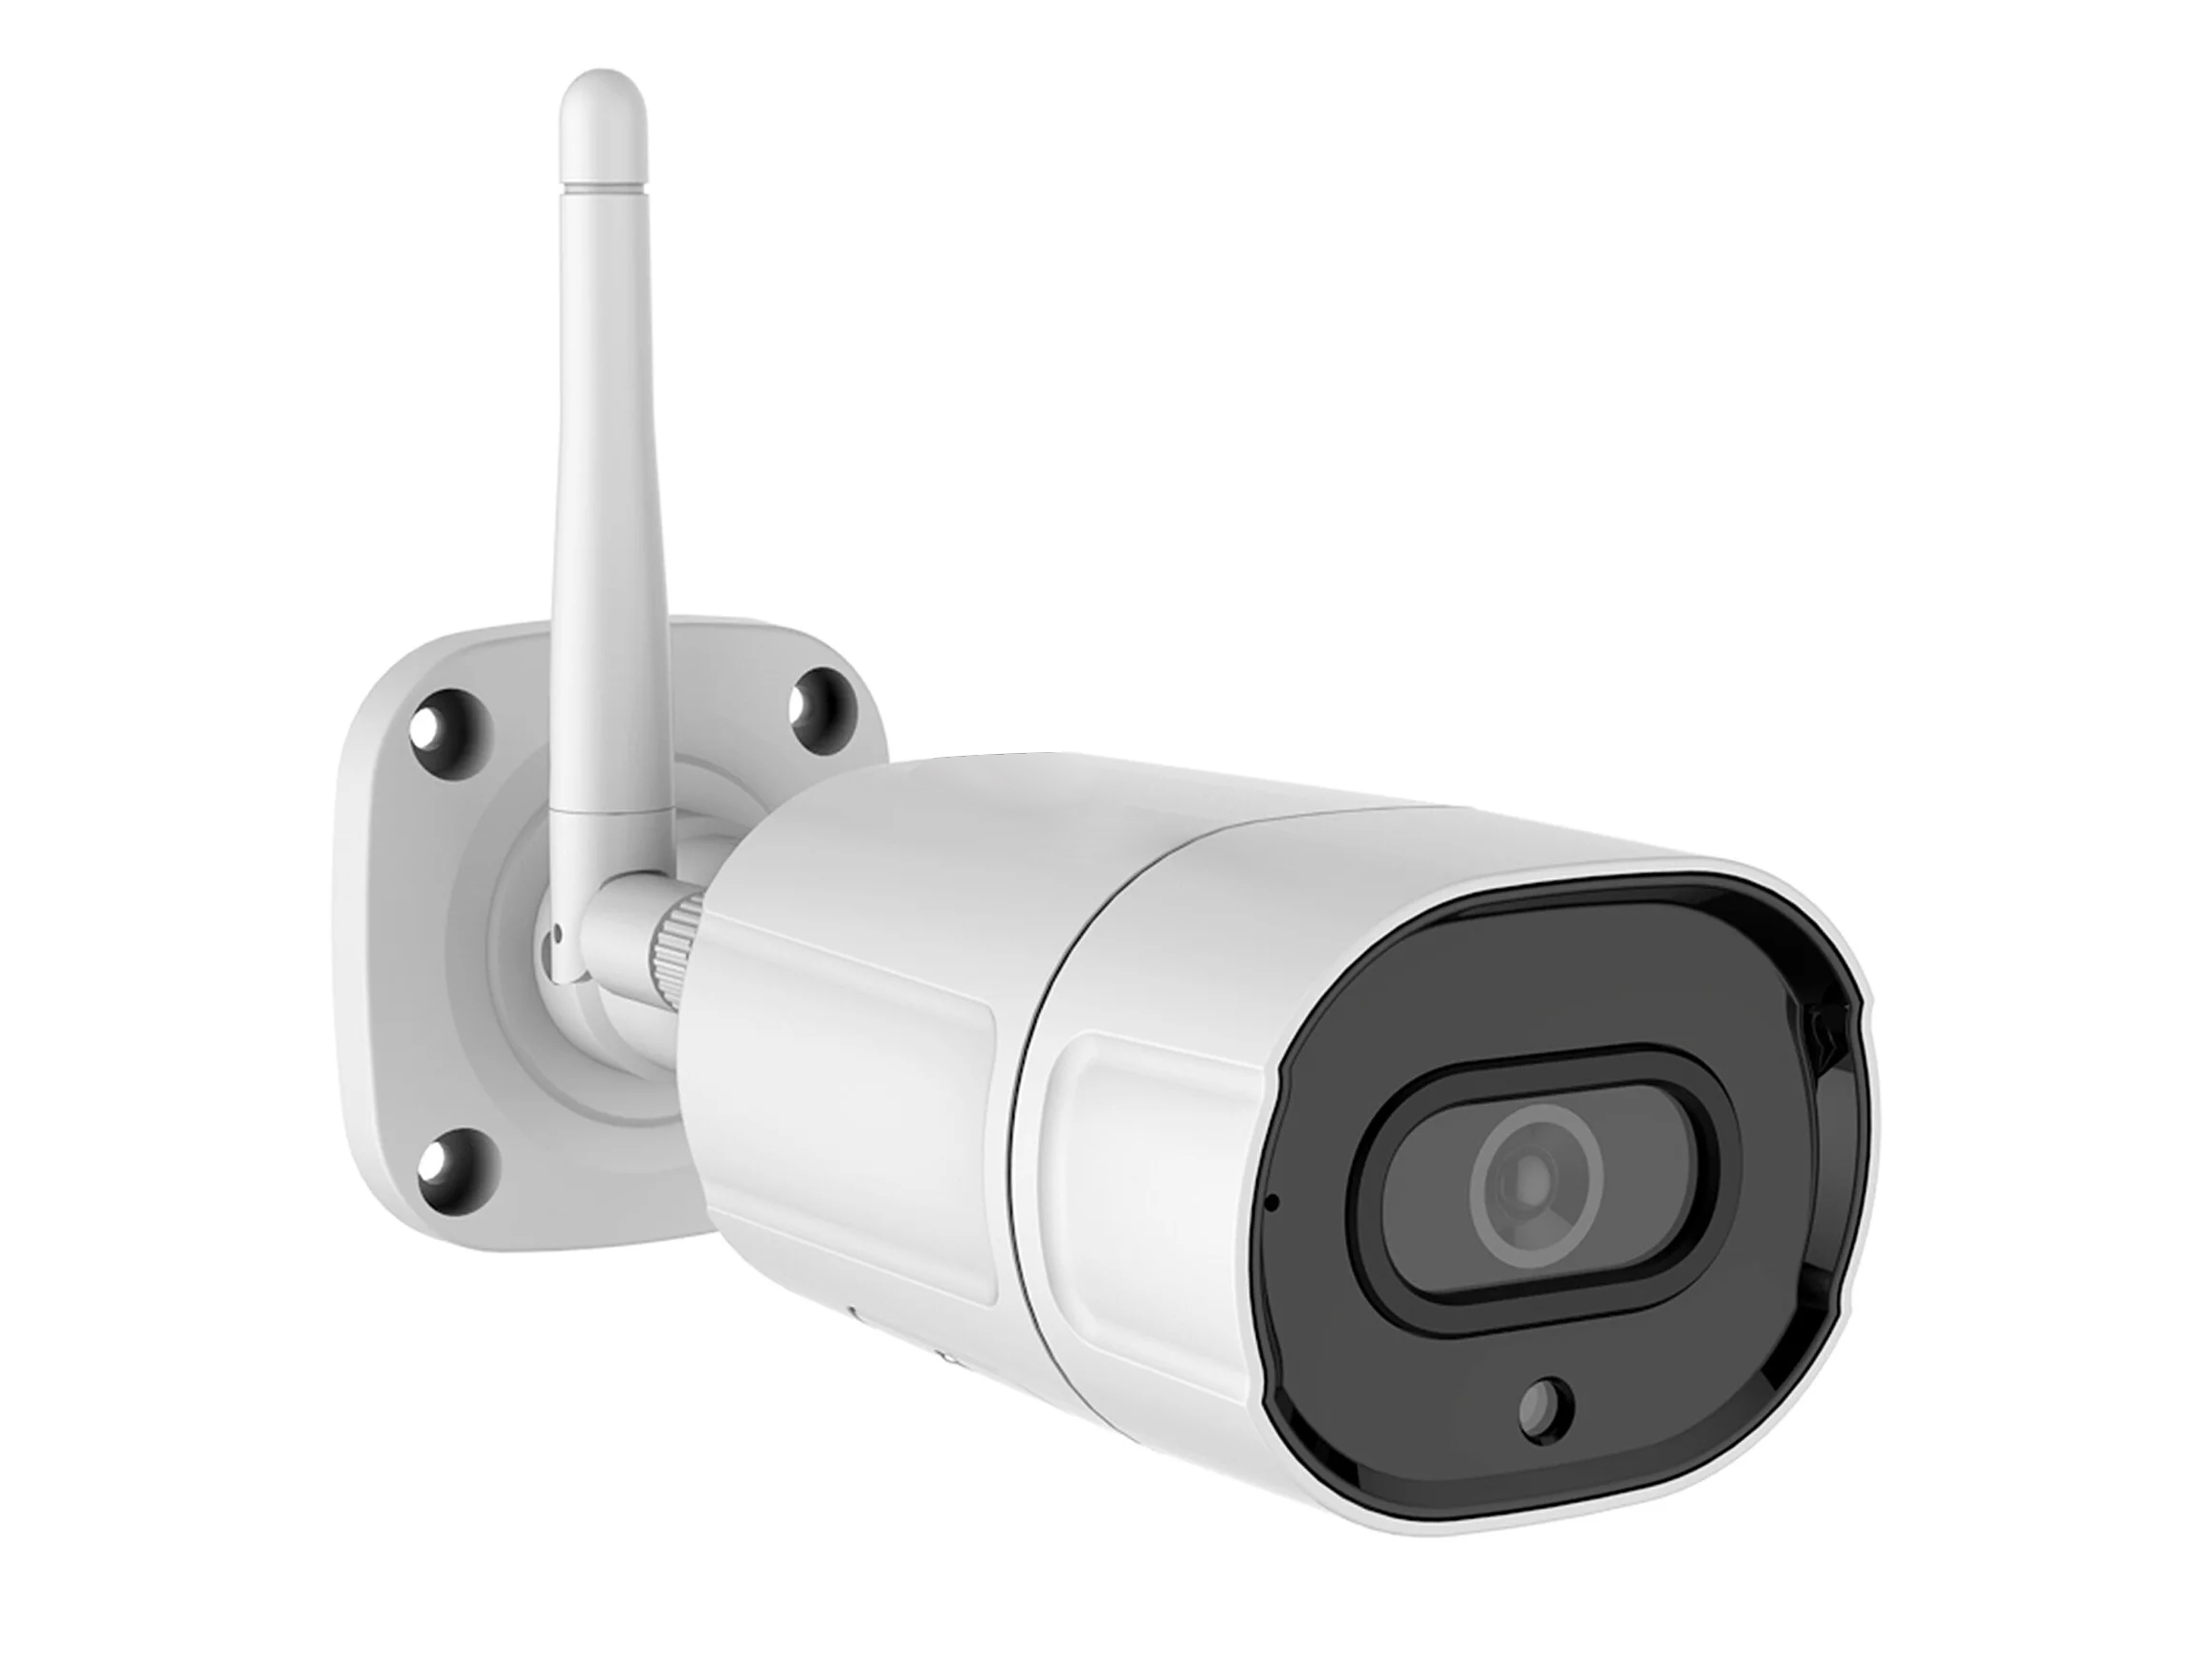 Уличная 4K Wi-Fi IP-камера ночного видеонаблюдения Link 402-ASW8-8GH 160921856 darell кормушка для птиц уличная беседка